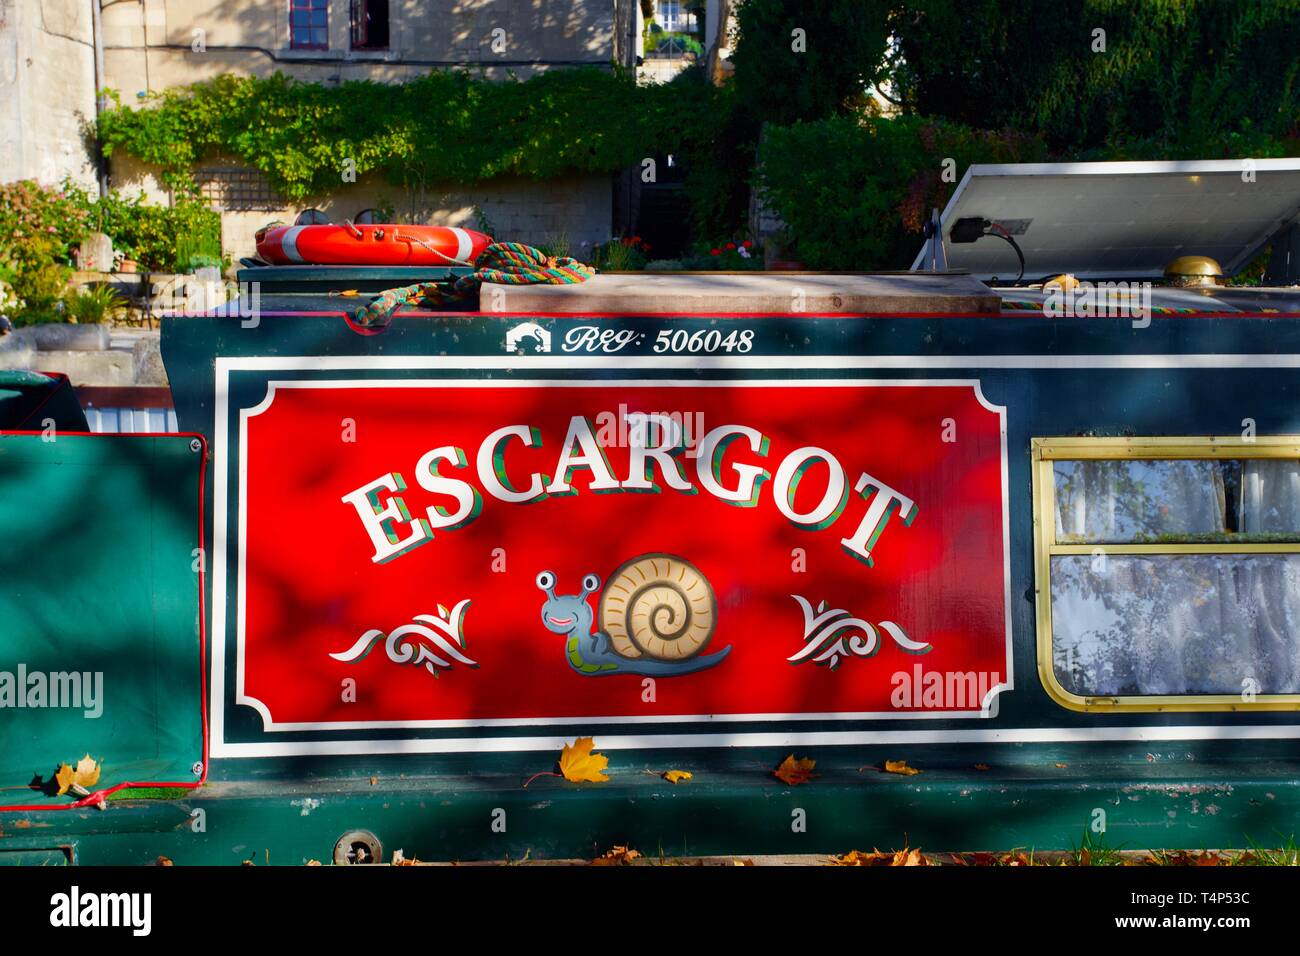 Narrow boat, Kennet & Avon Canal, Bath,Somerset, England. Stock Photo